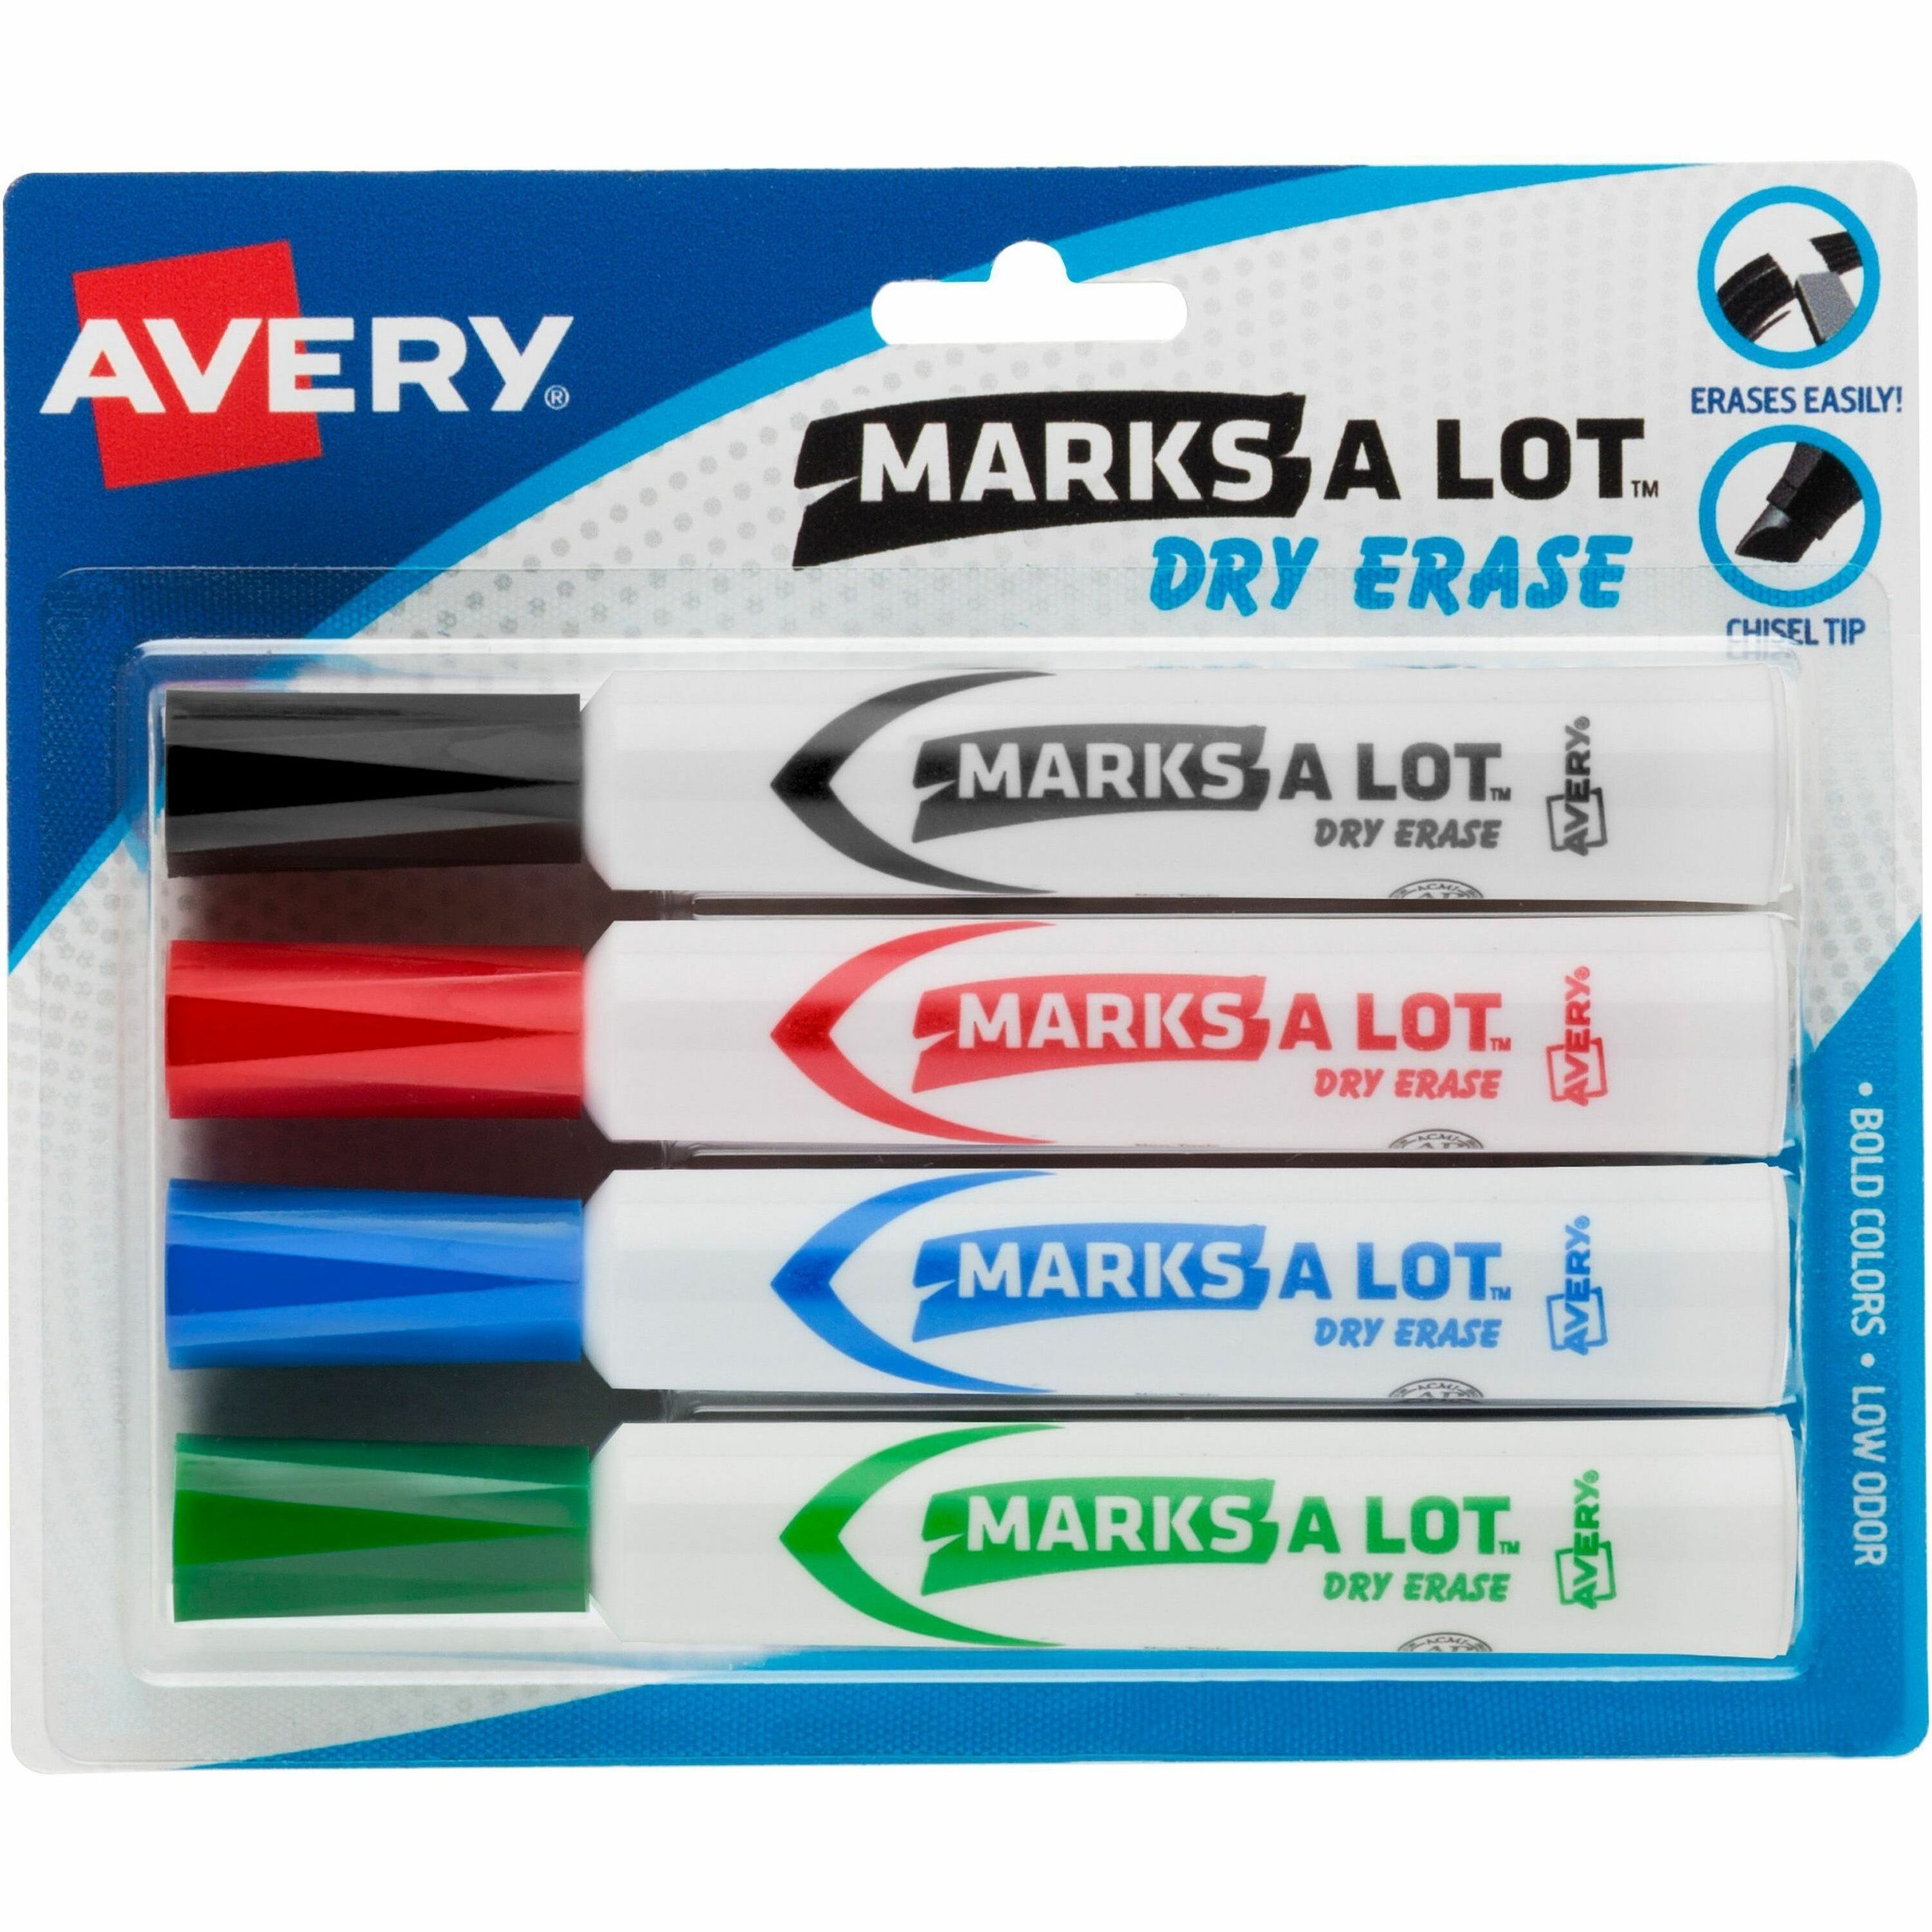 DIY Plexiglass Whiteboard - dry erase or wet erase markers? : r